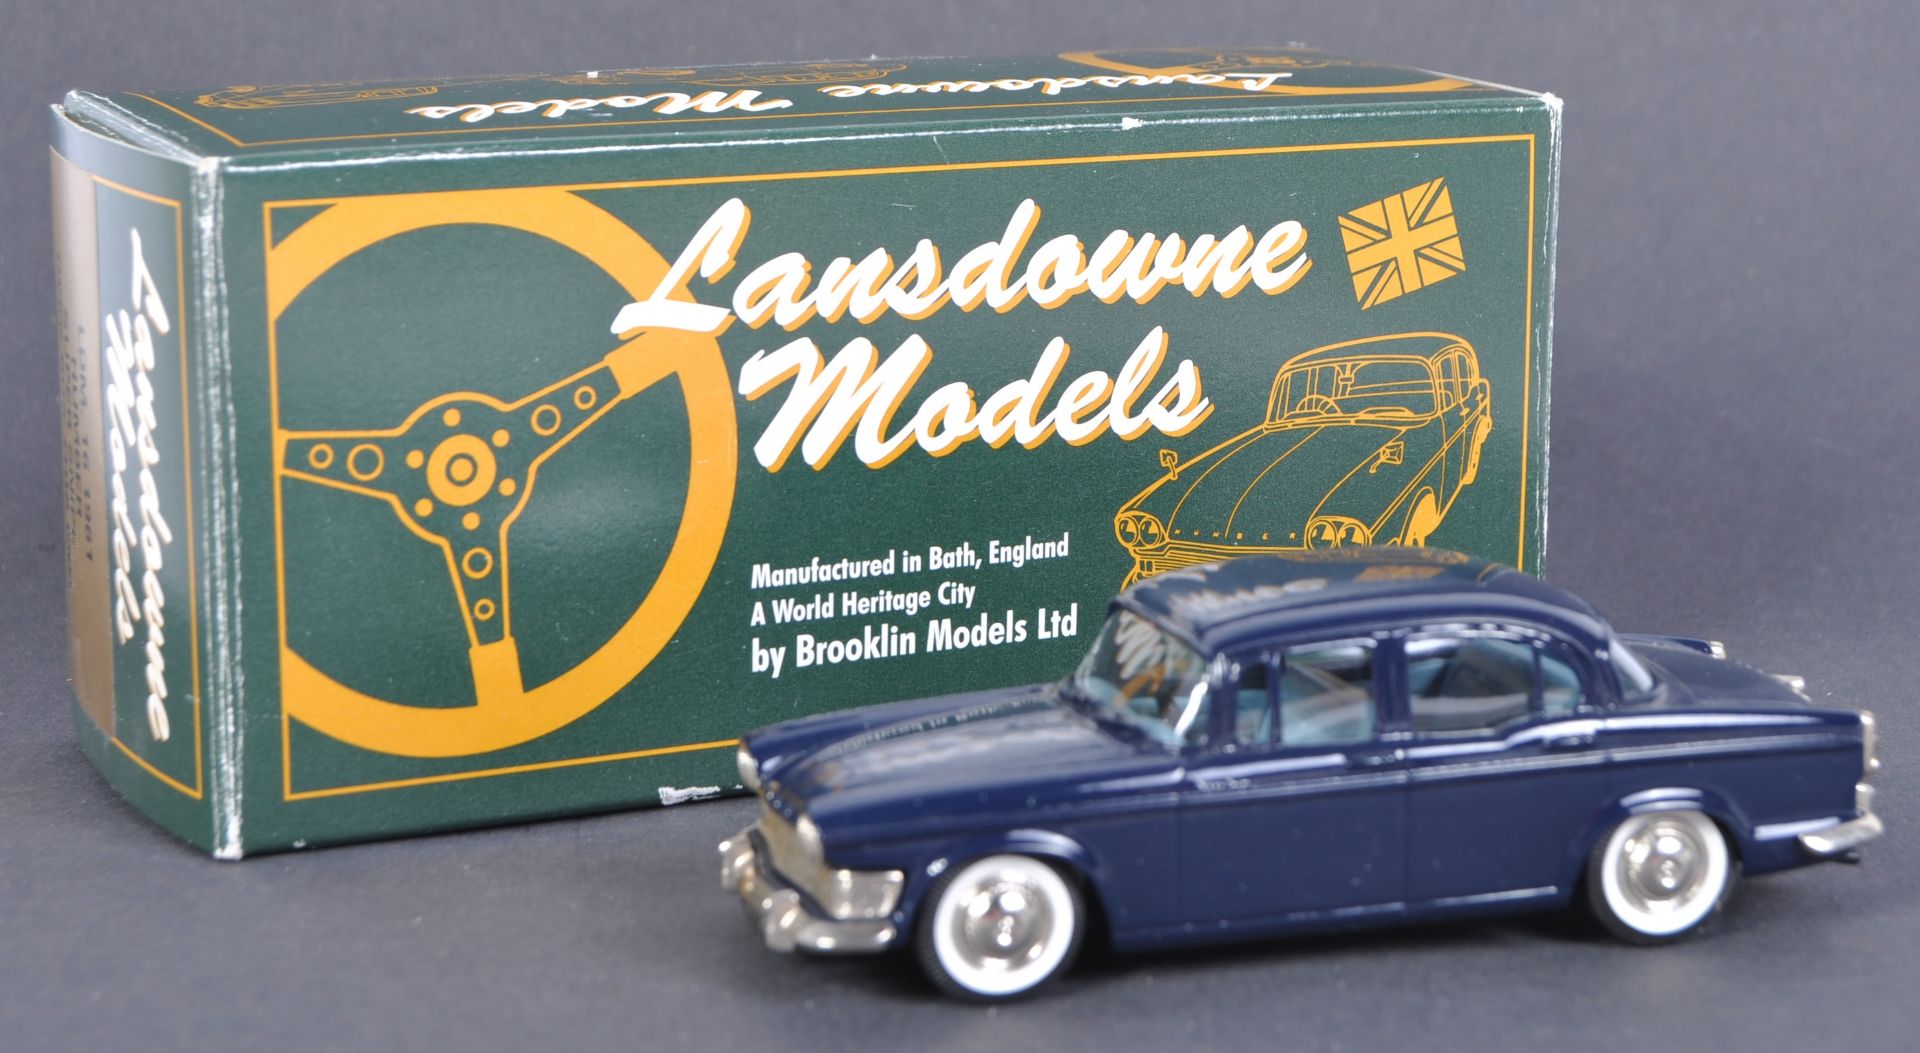 ORIGINAL LANSDOWNE MODELS 1/43 SCALE DIECAST MODEL CAR